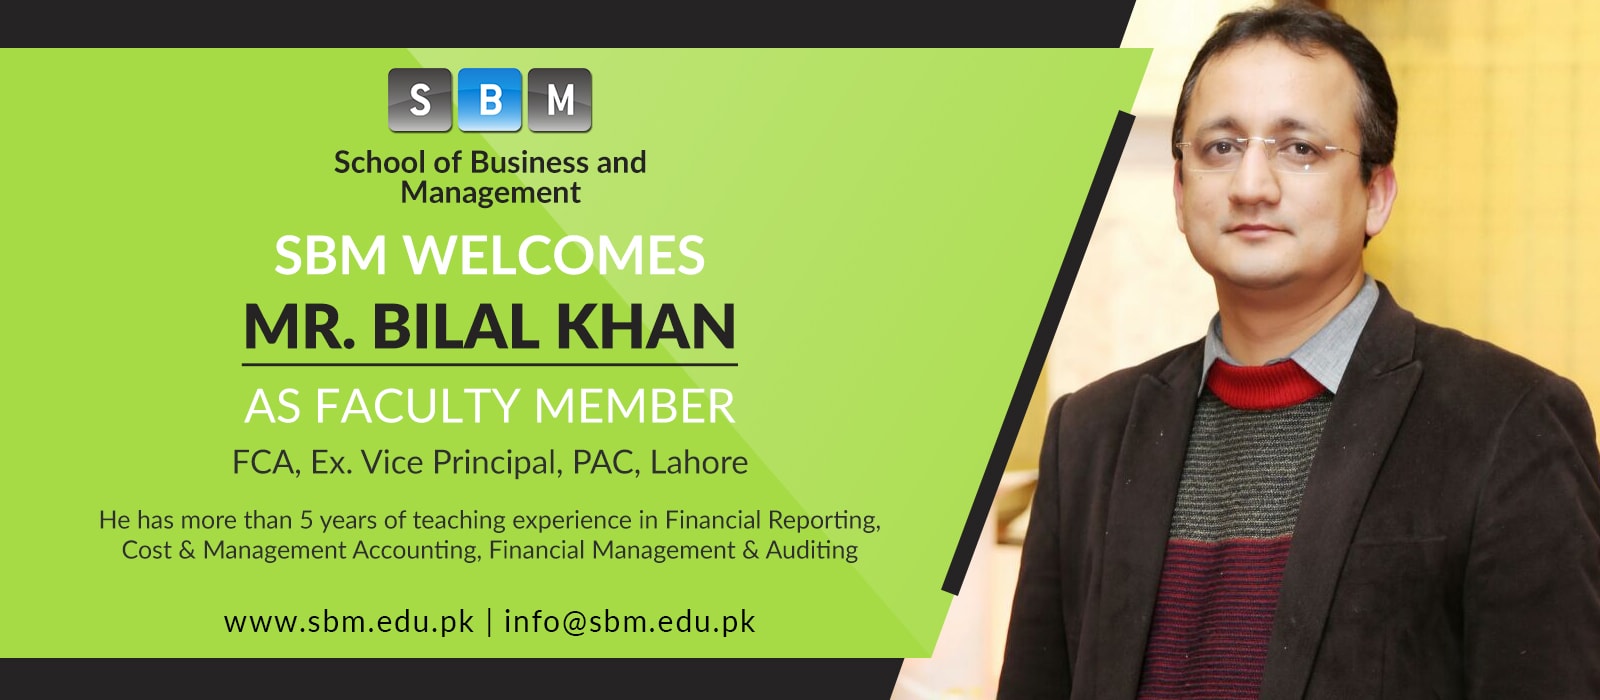 Mr Bilal Khan has joined SBM as Faculty Member